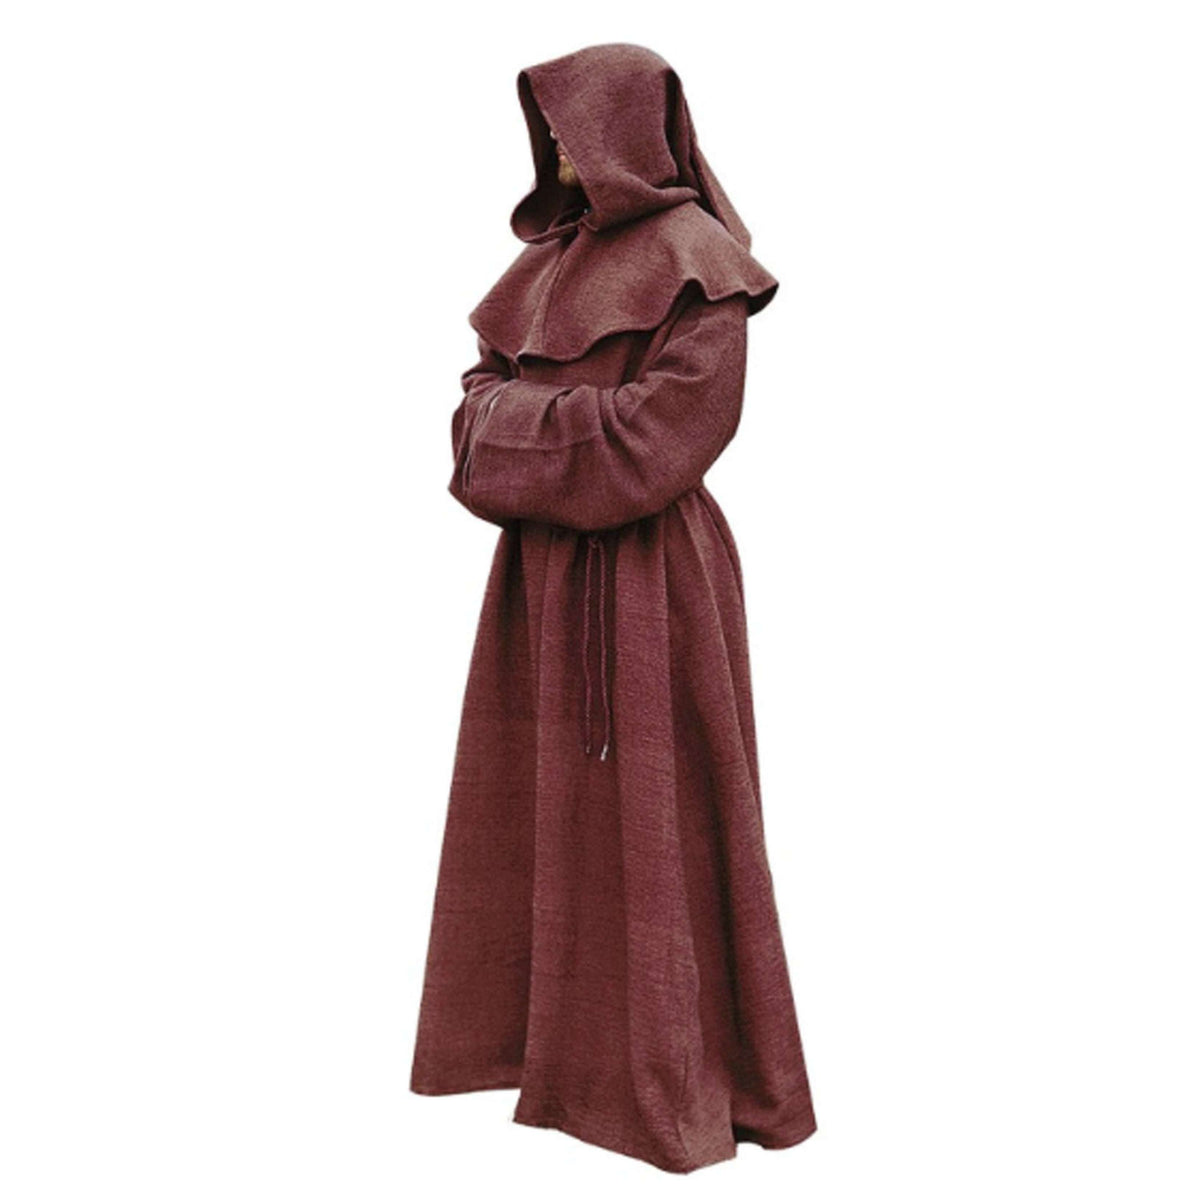 Brown Monk Robe Adult Costume